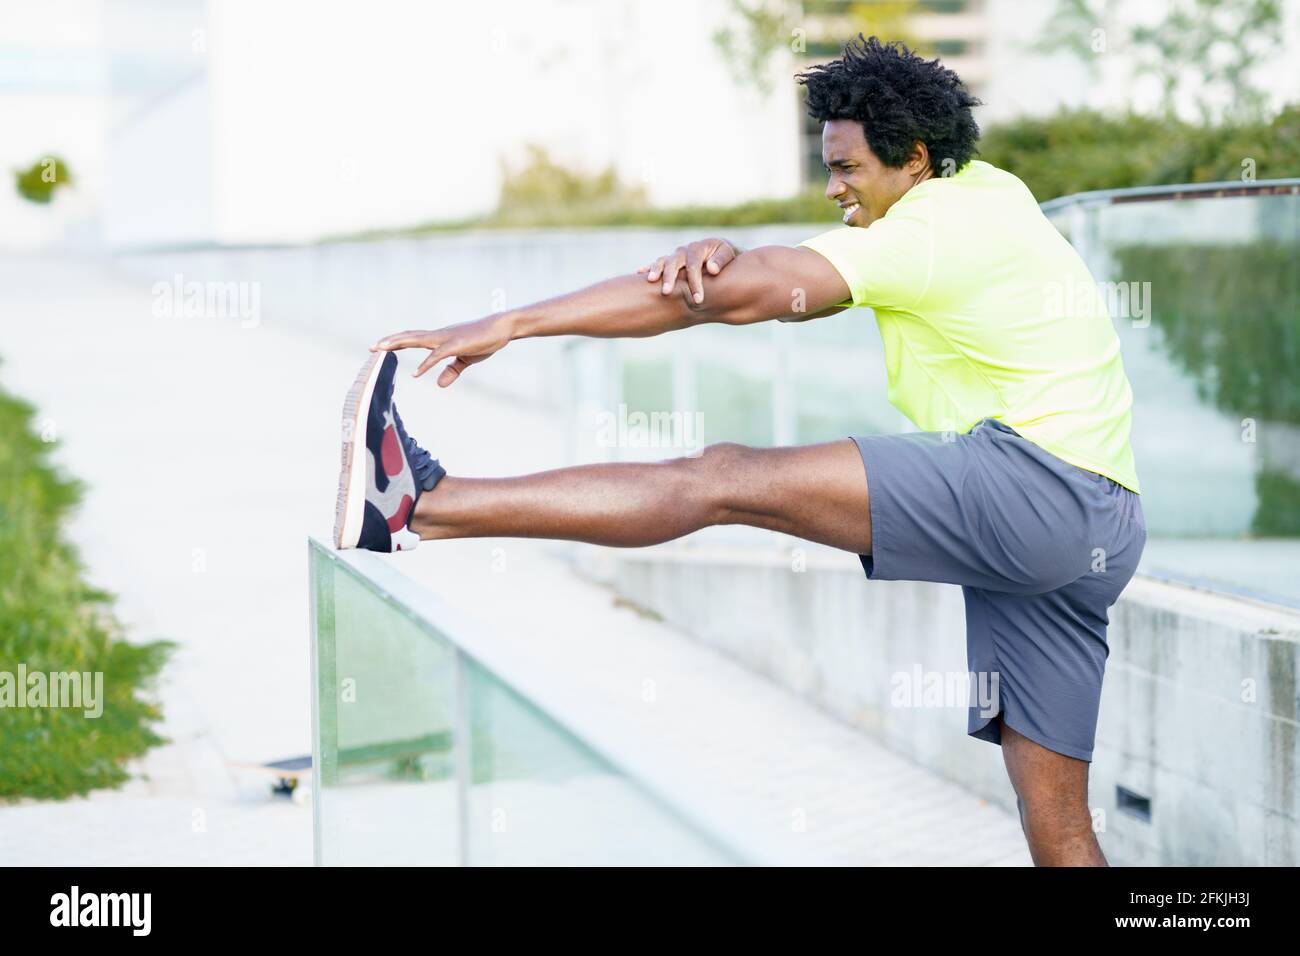 Hombre negro con pelo afro que se estira después de correr al aire libre. Foto de stock